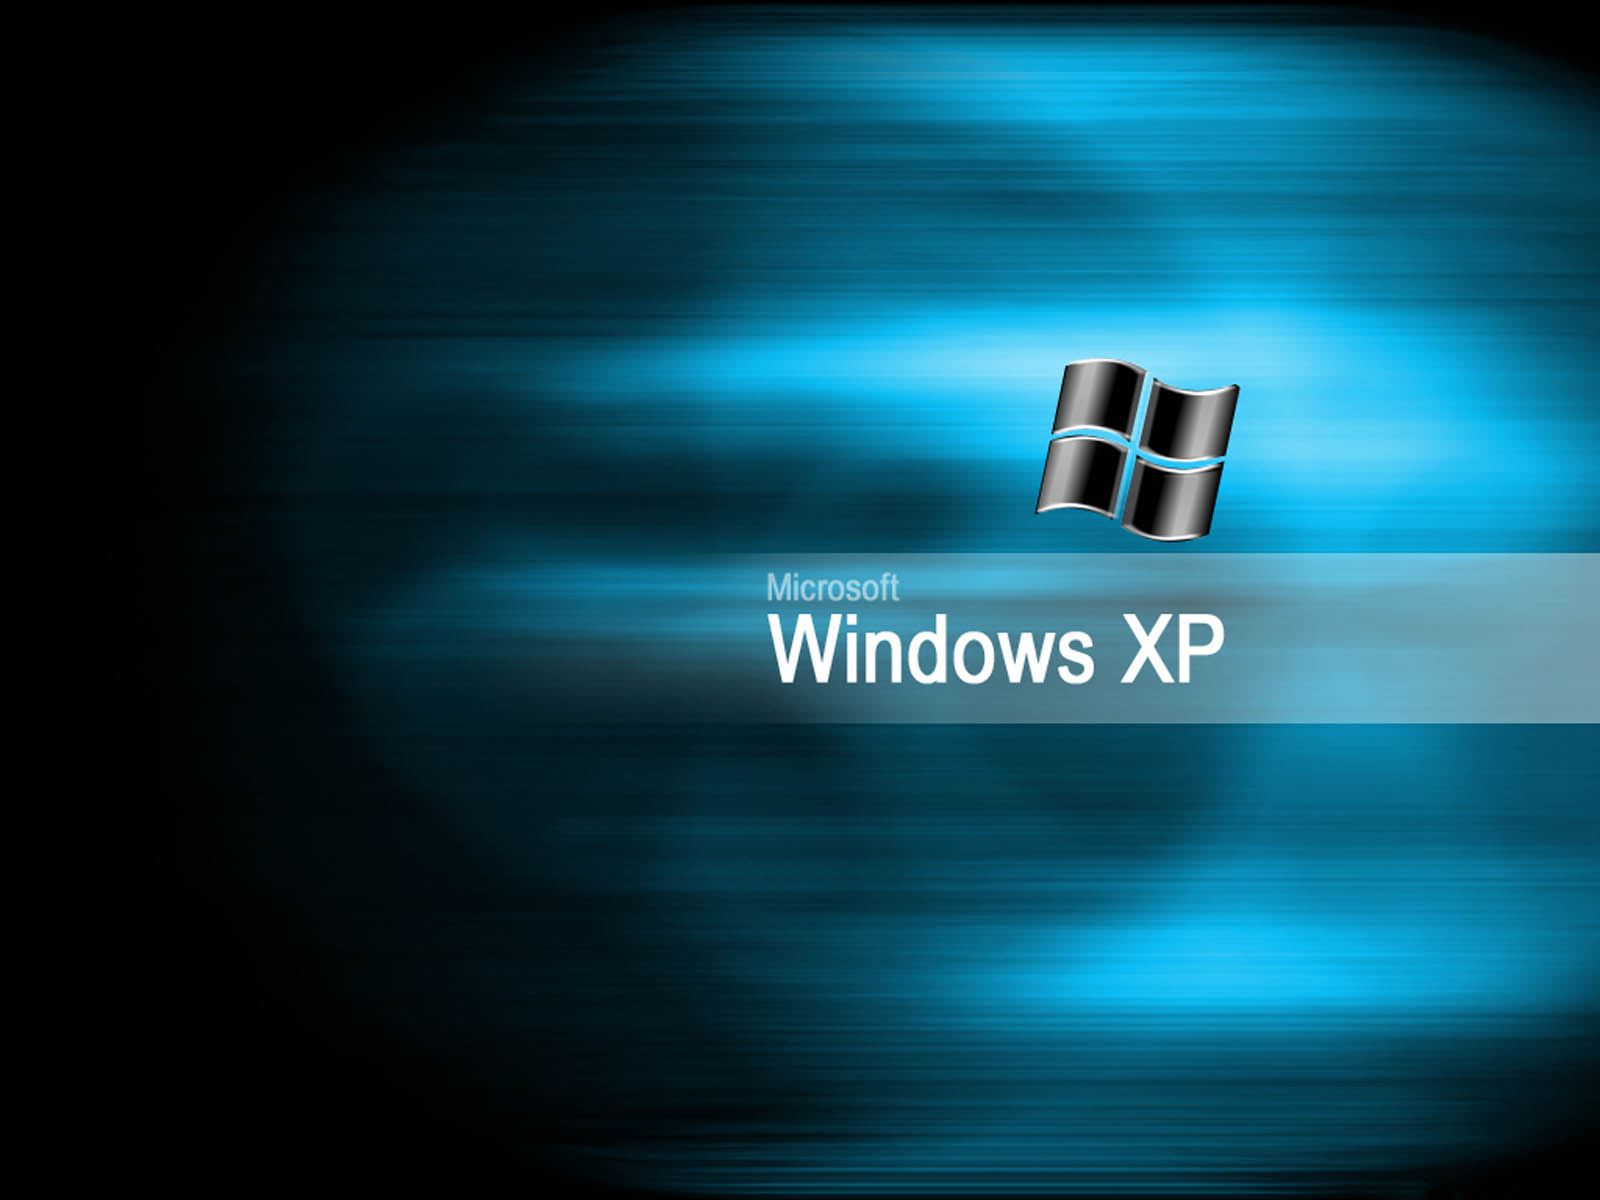 Find more wallpapers Windows XP Desktop Wallpapers. wallpapers Windows XP D...